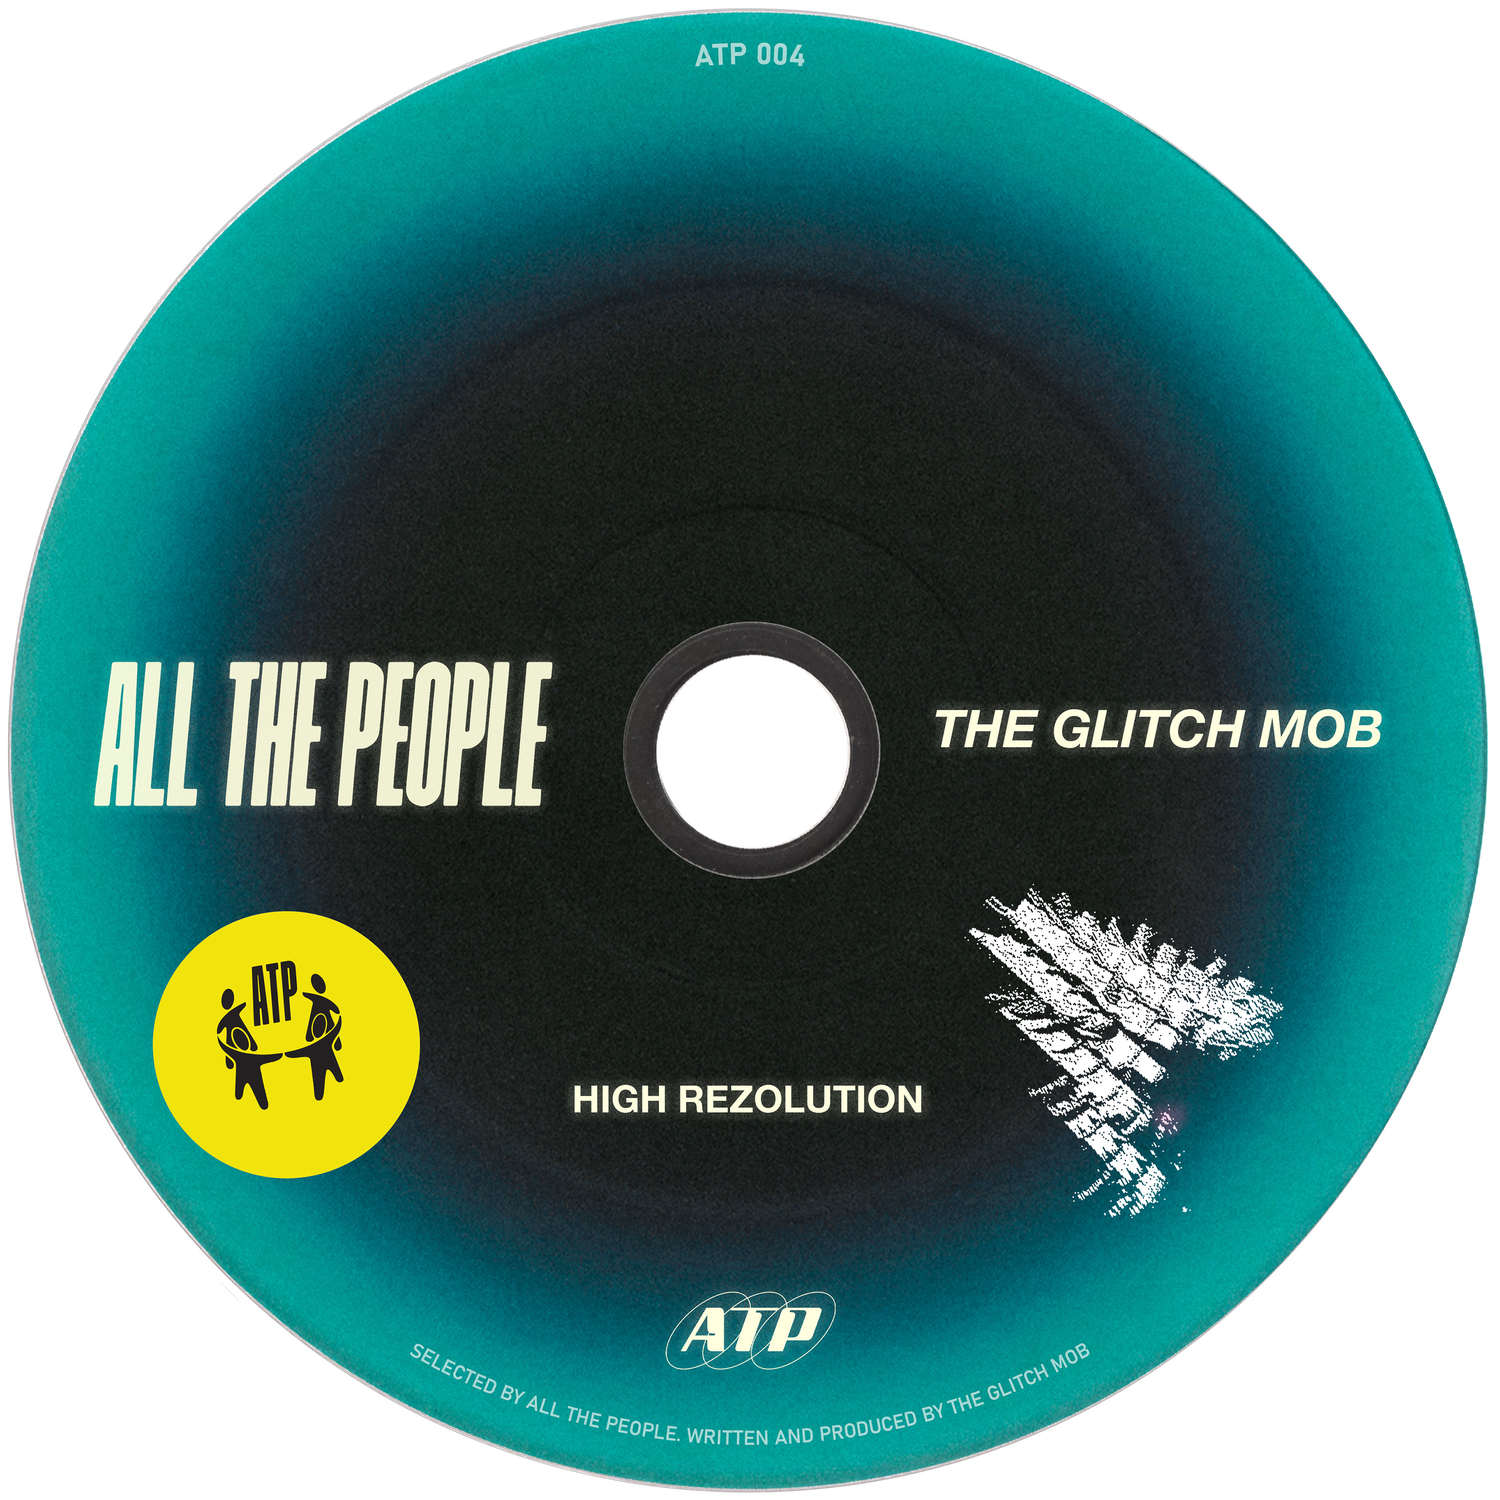 The Glitch Mob – High Rezolution